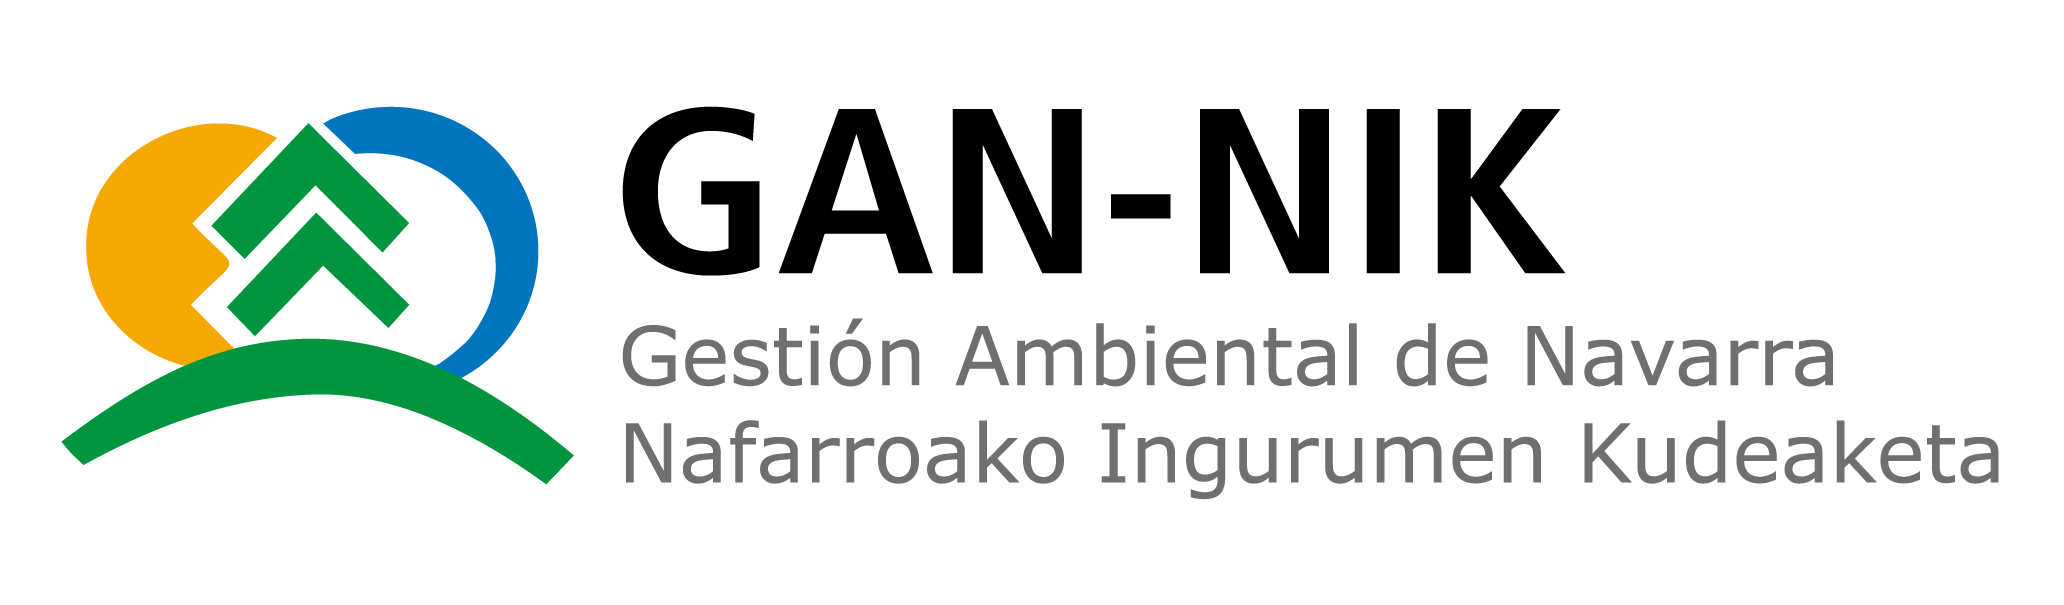 GAN_NIK - Alargado